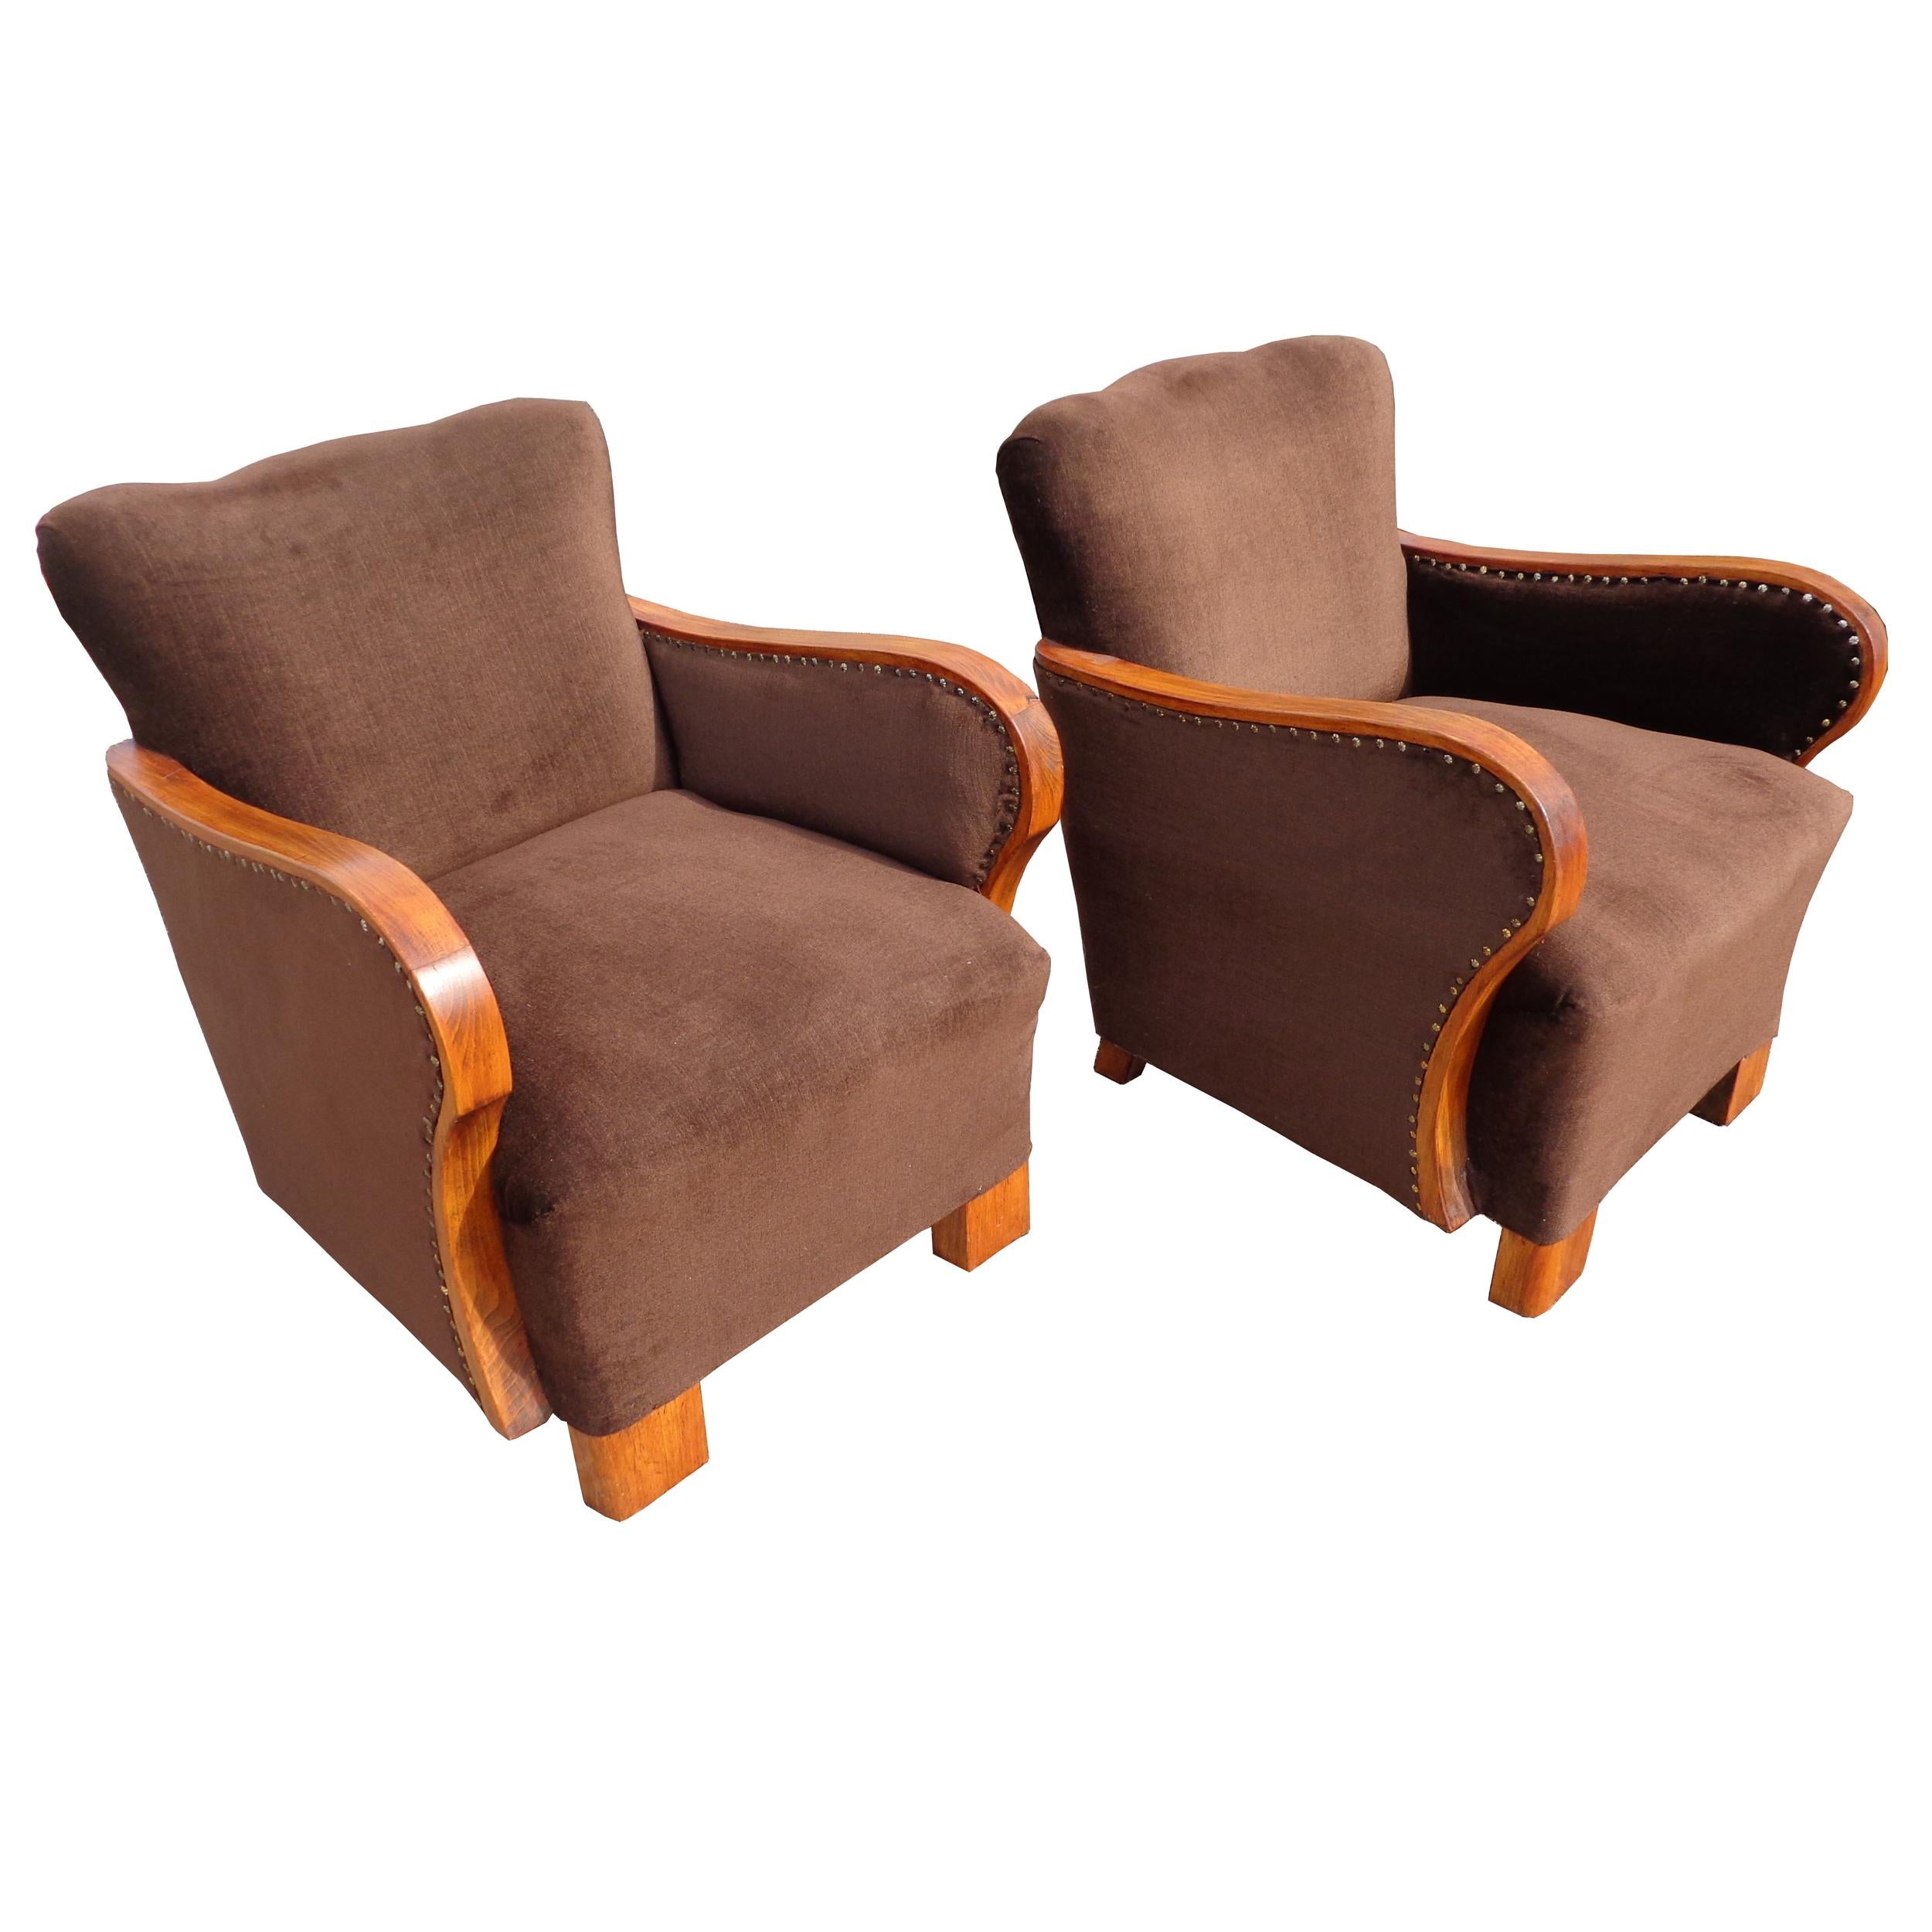 Pair of Original 1930’s Art Deco Lounge Chairs